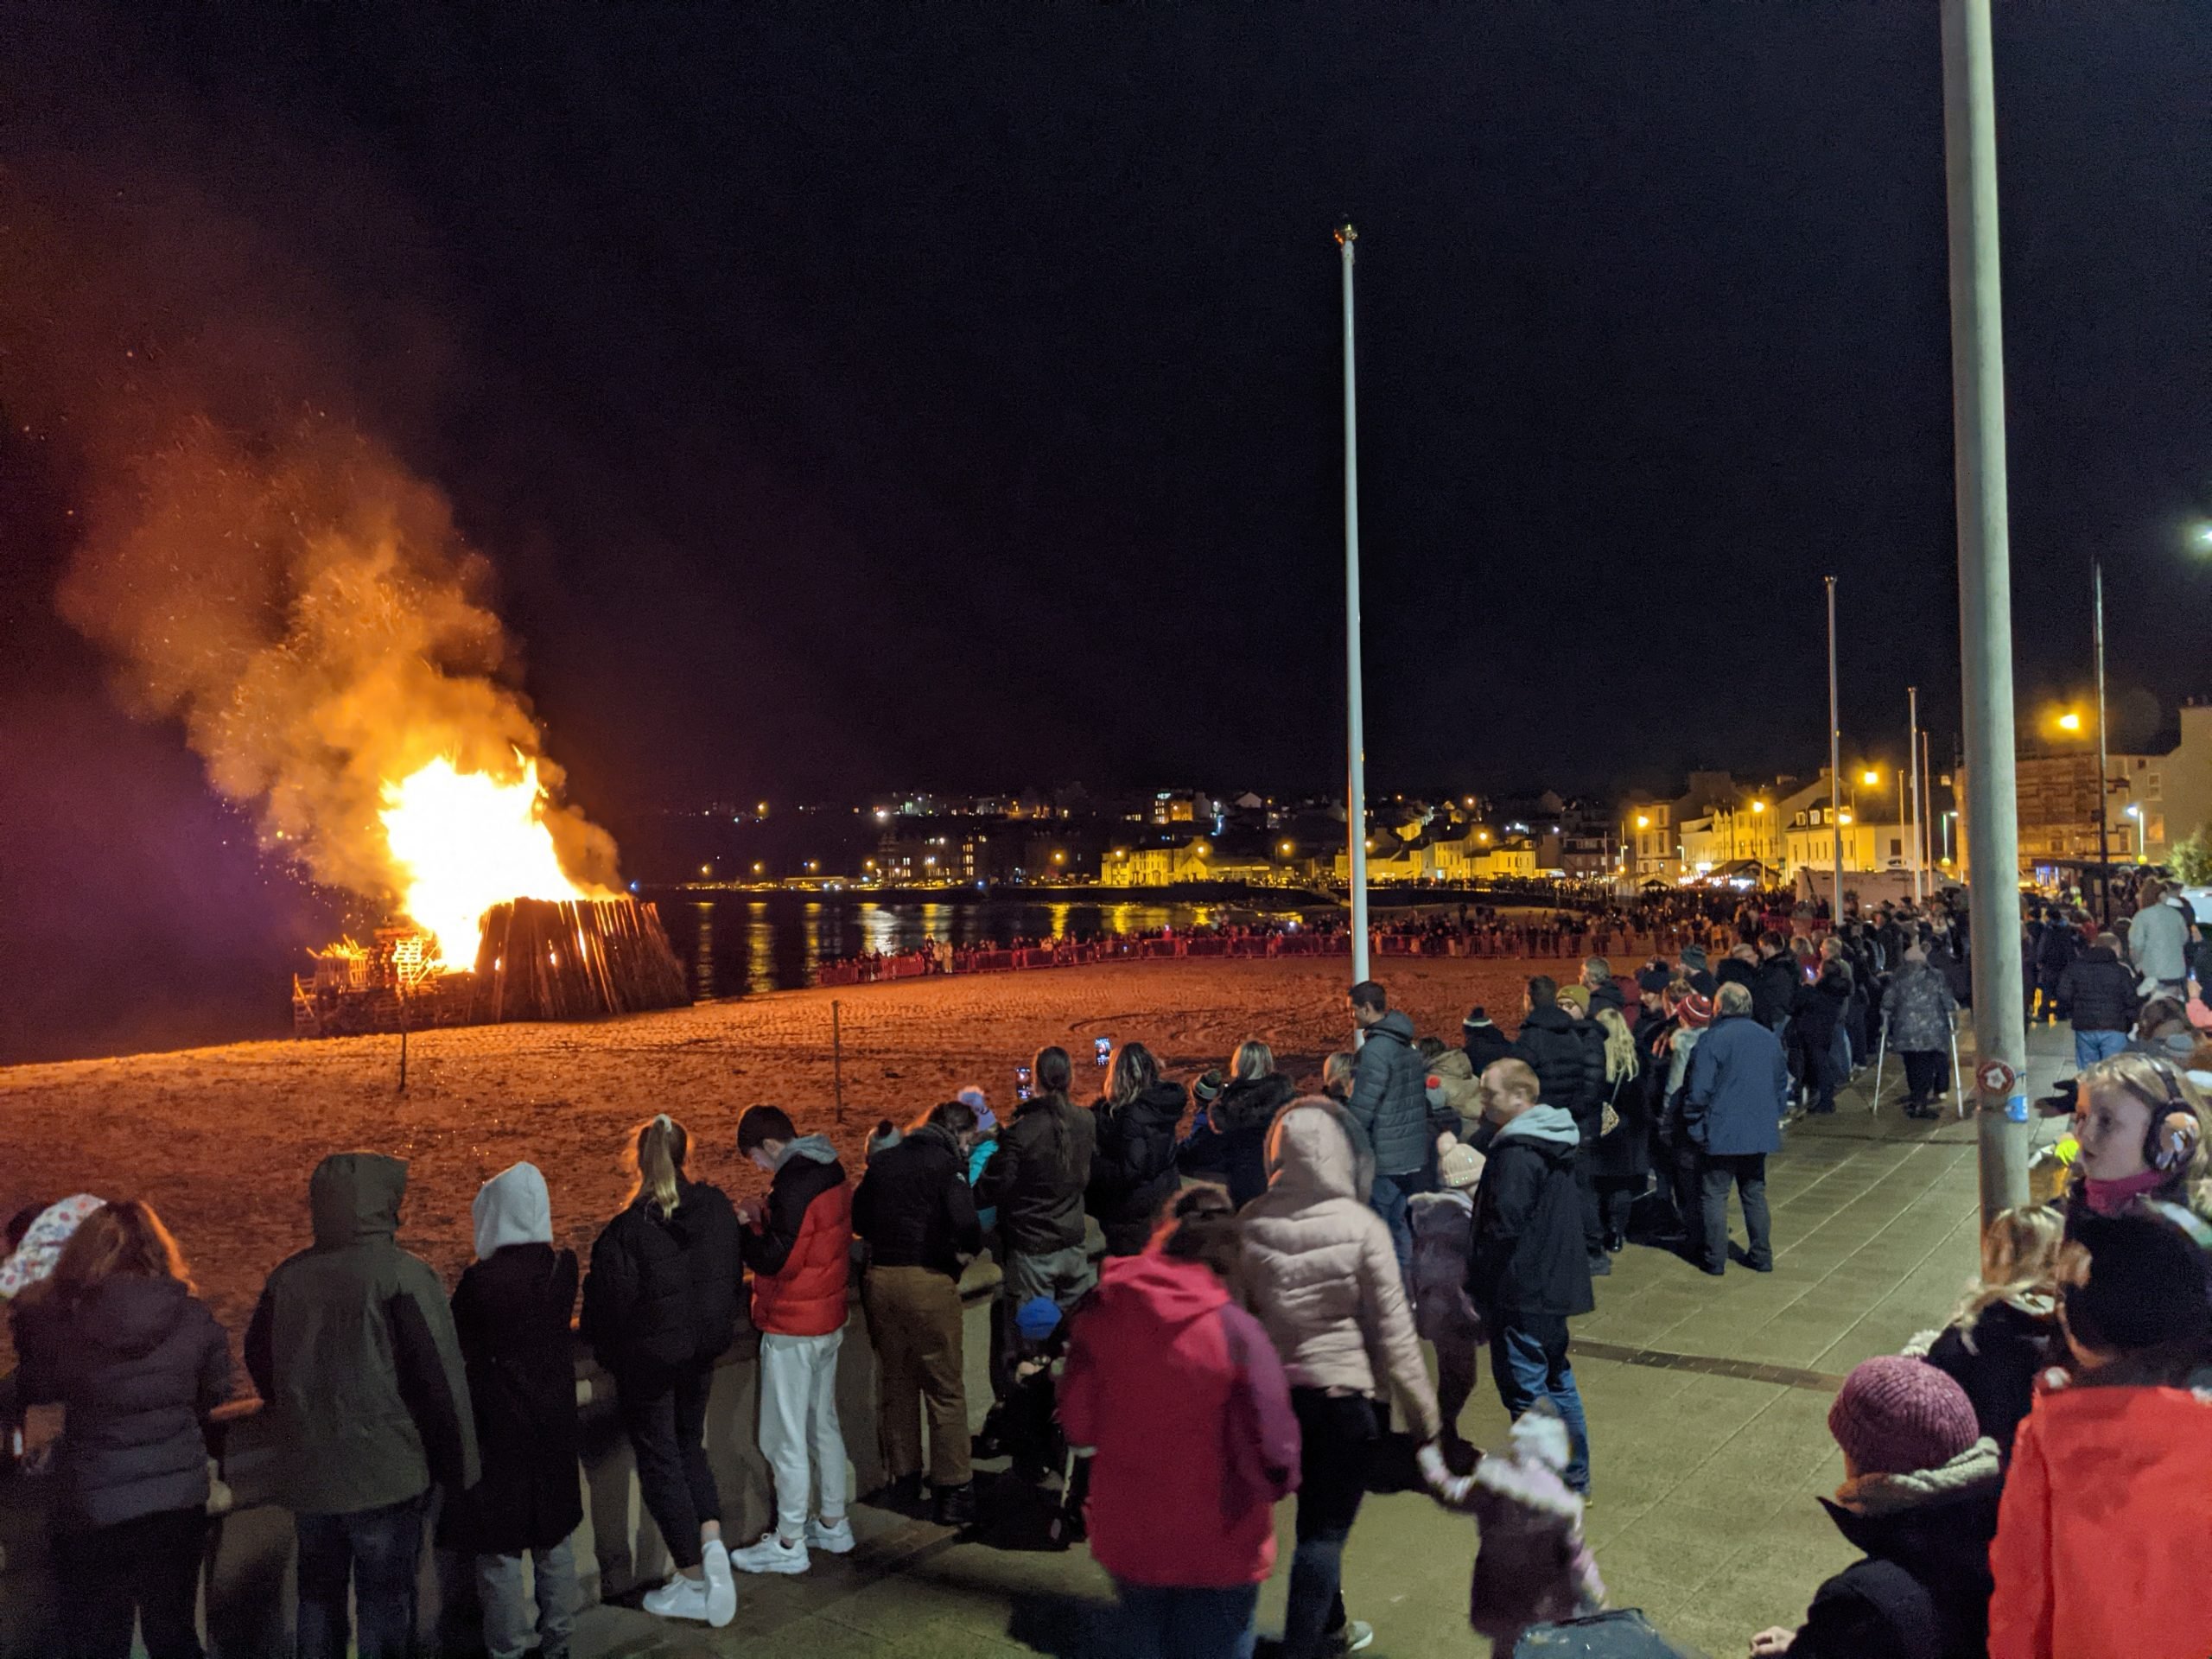 Peel Commissioners' Firework display and preparations